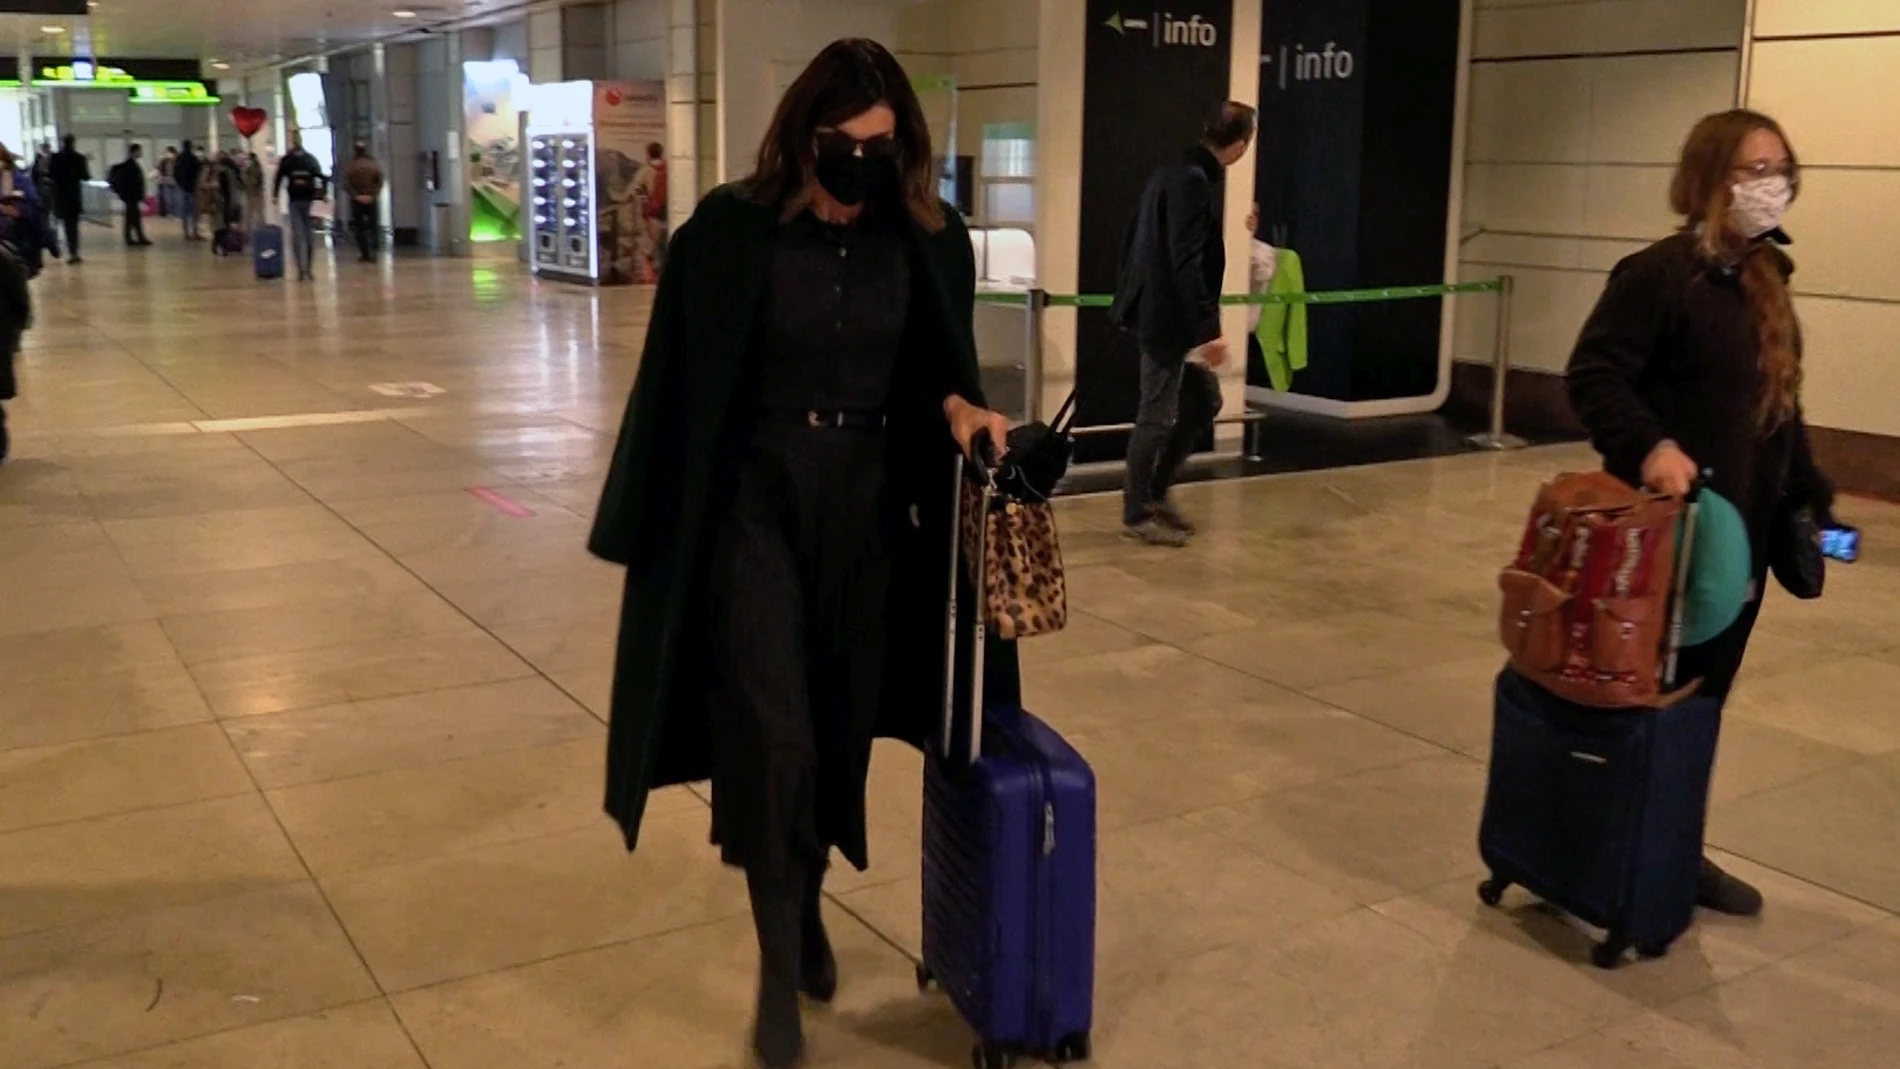 Alba Santana at Barajasairport in Madrid on Monday